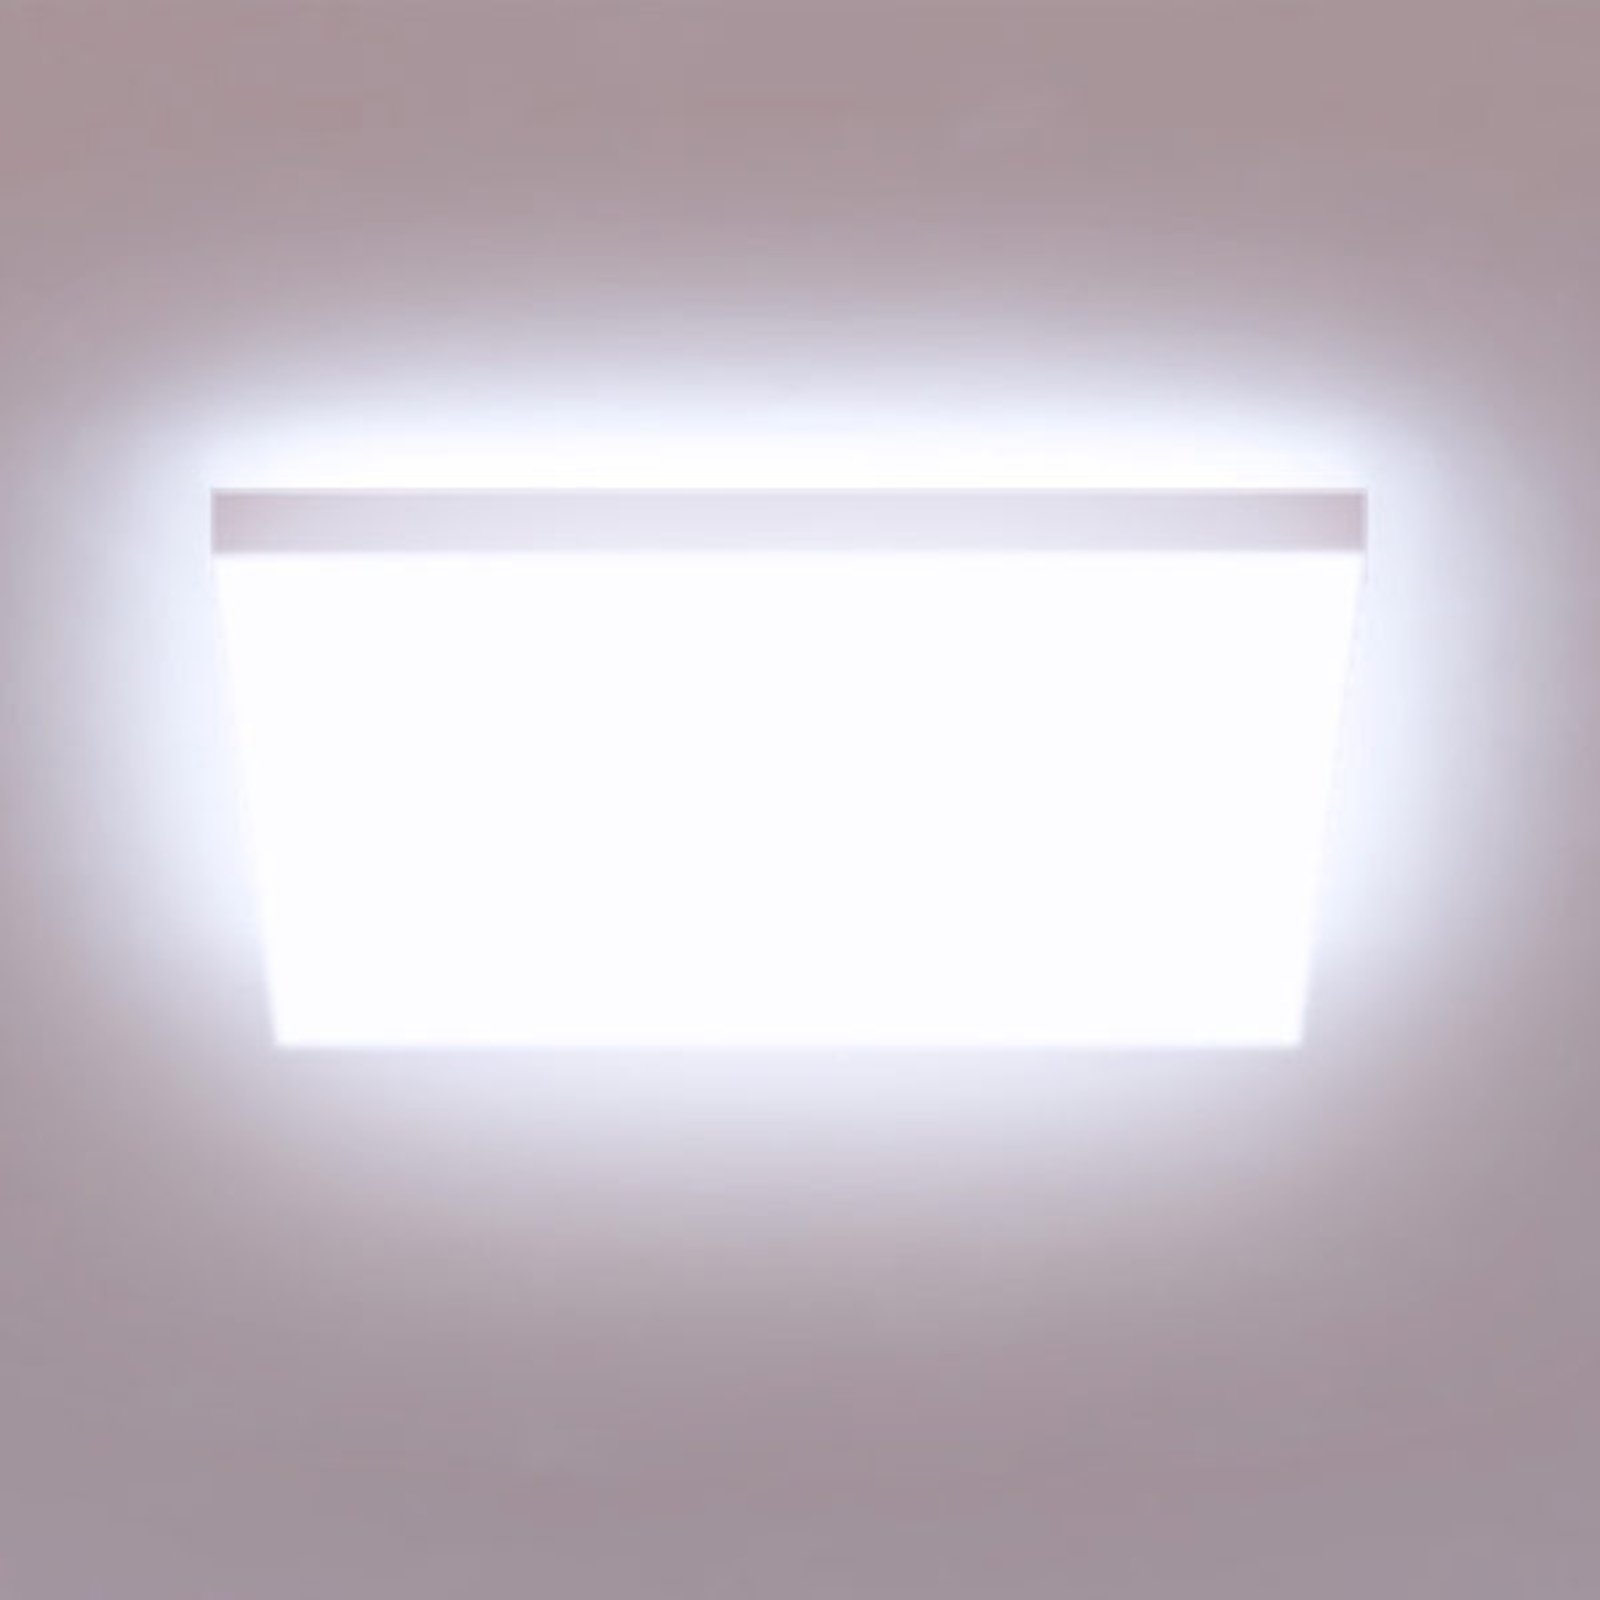 Müller Licht tint Loris LED-panel, 45x45cm